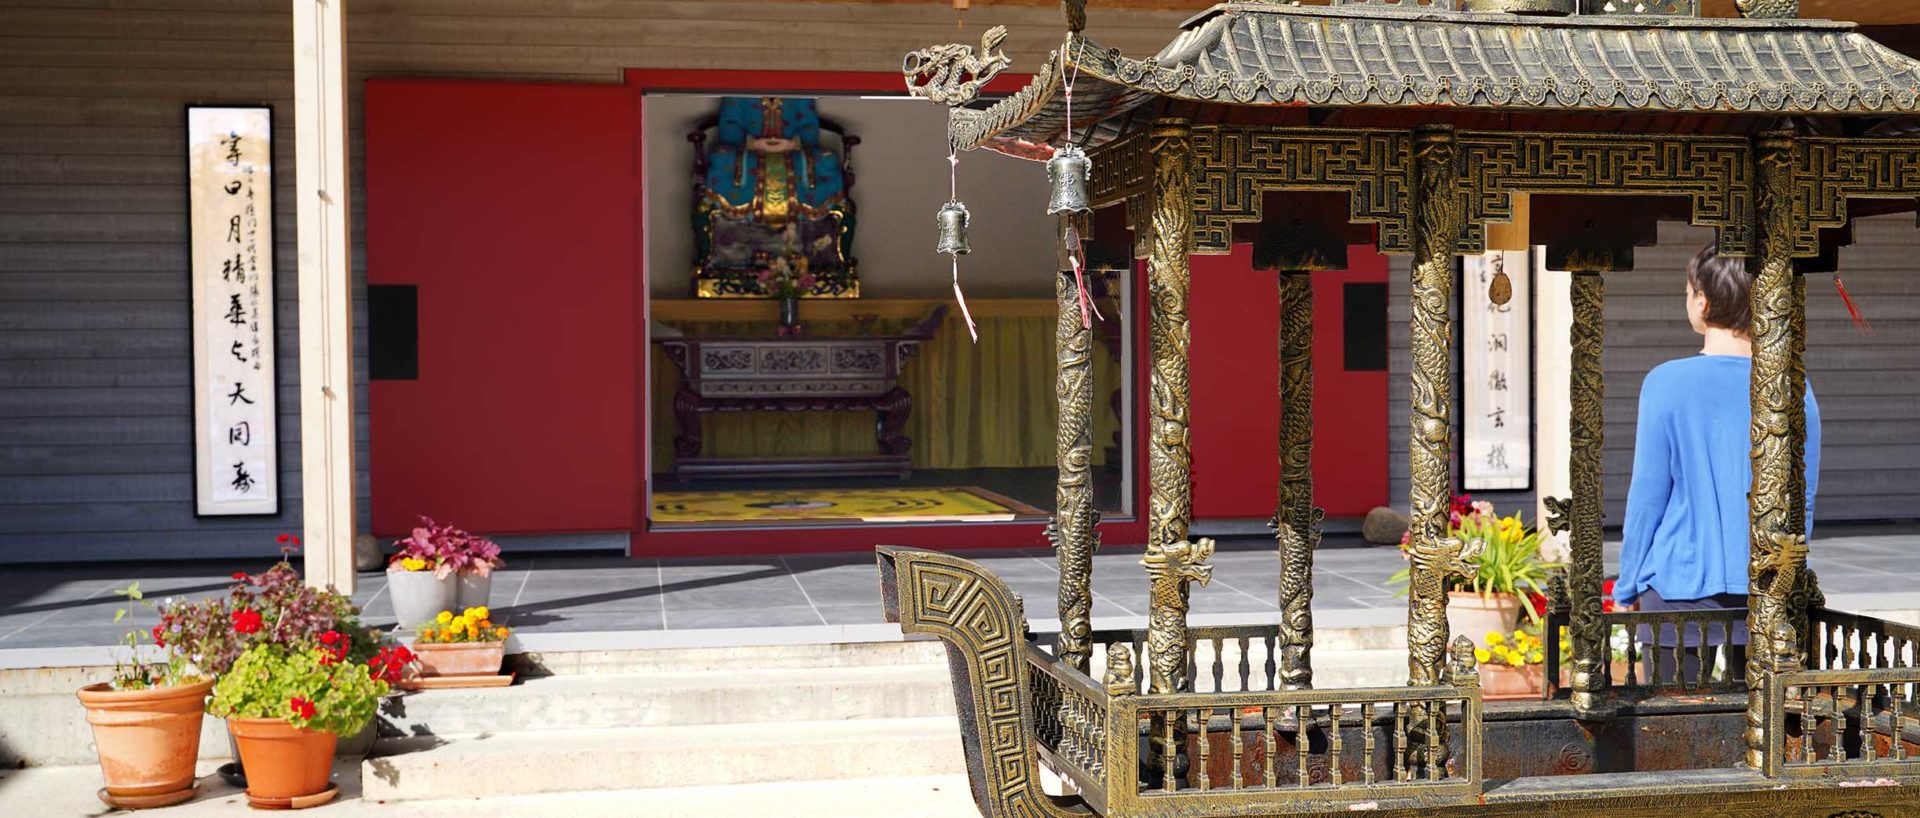 ming-shan-temple-meditation